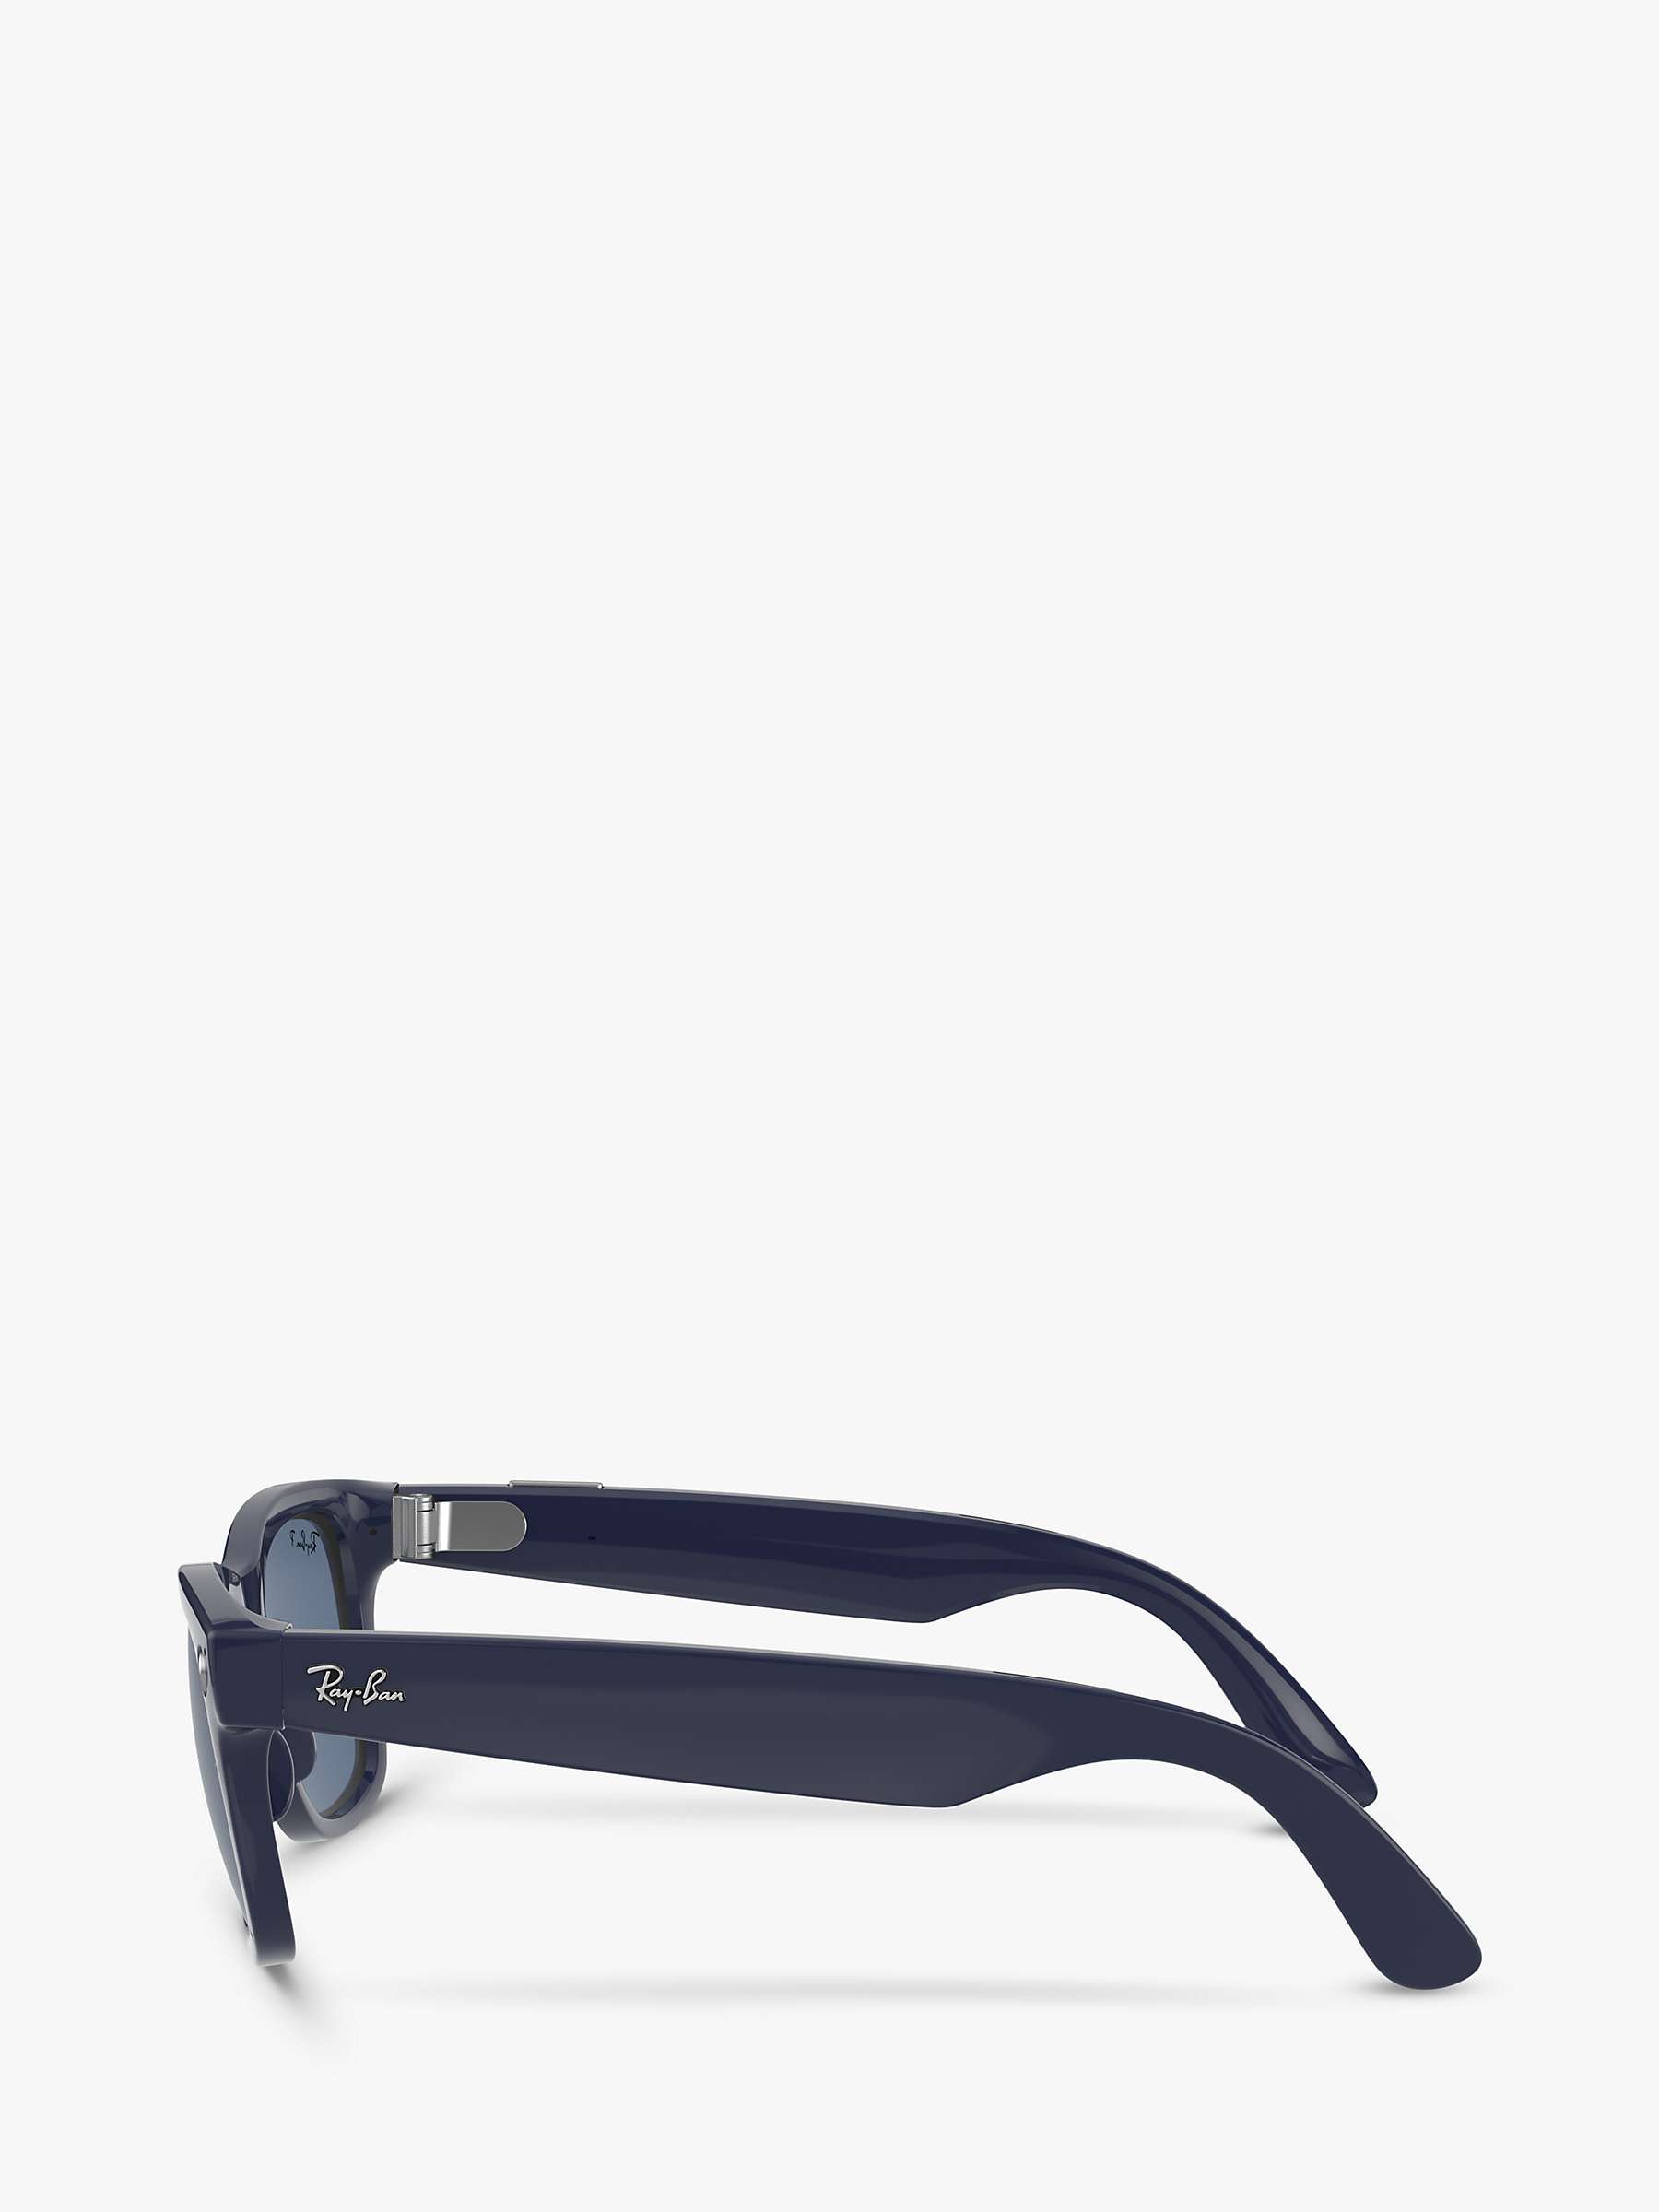 Buy Ray-Ban Stories Wayfarer Large Smart Sunglasses, Shiny Blue/Blue Online at johnlewis.com